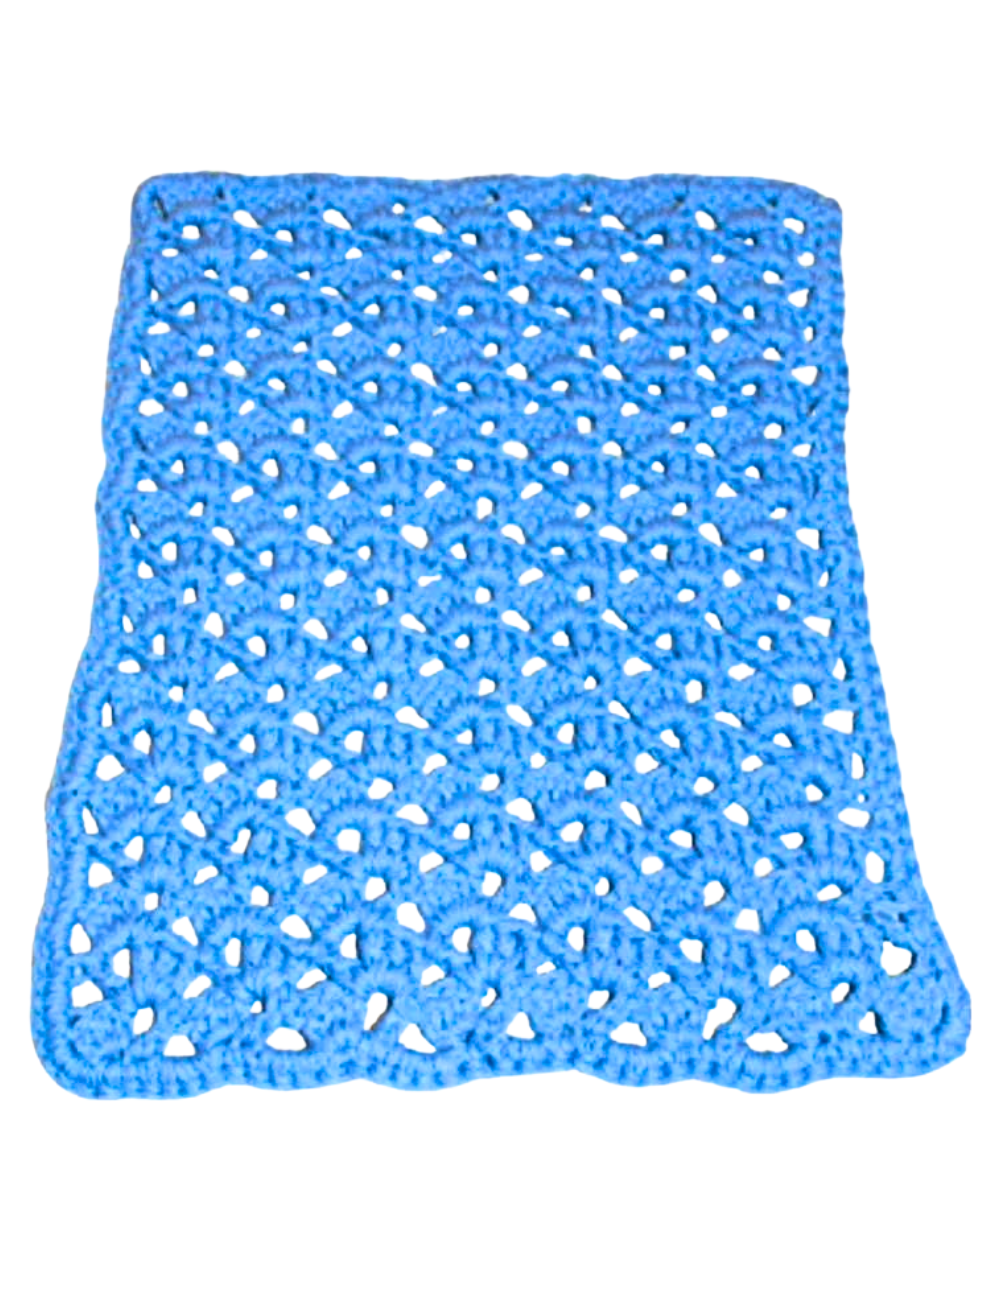 Crochet a Shell Dishcloth